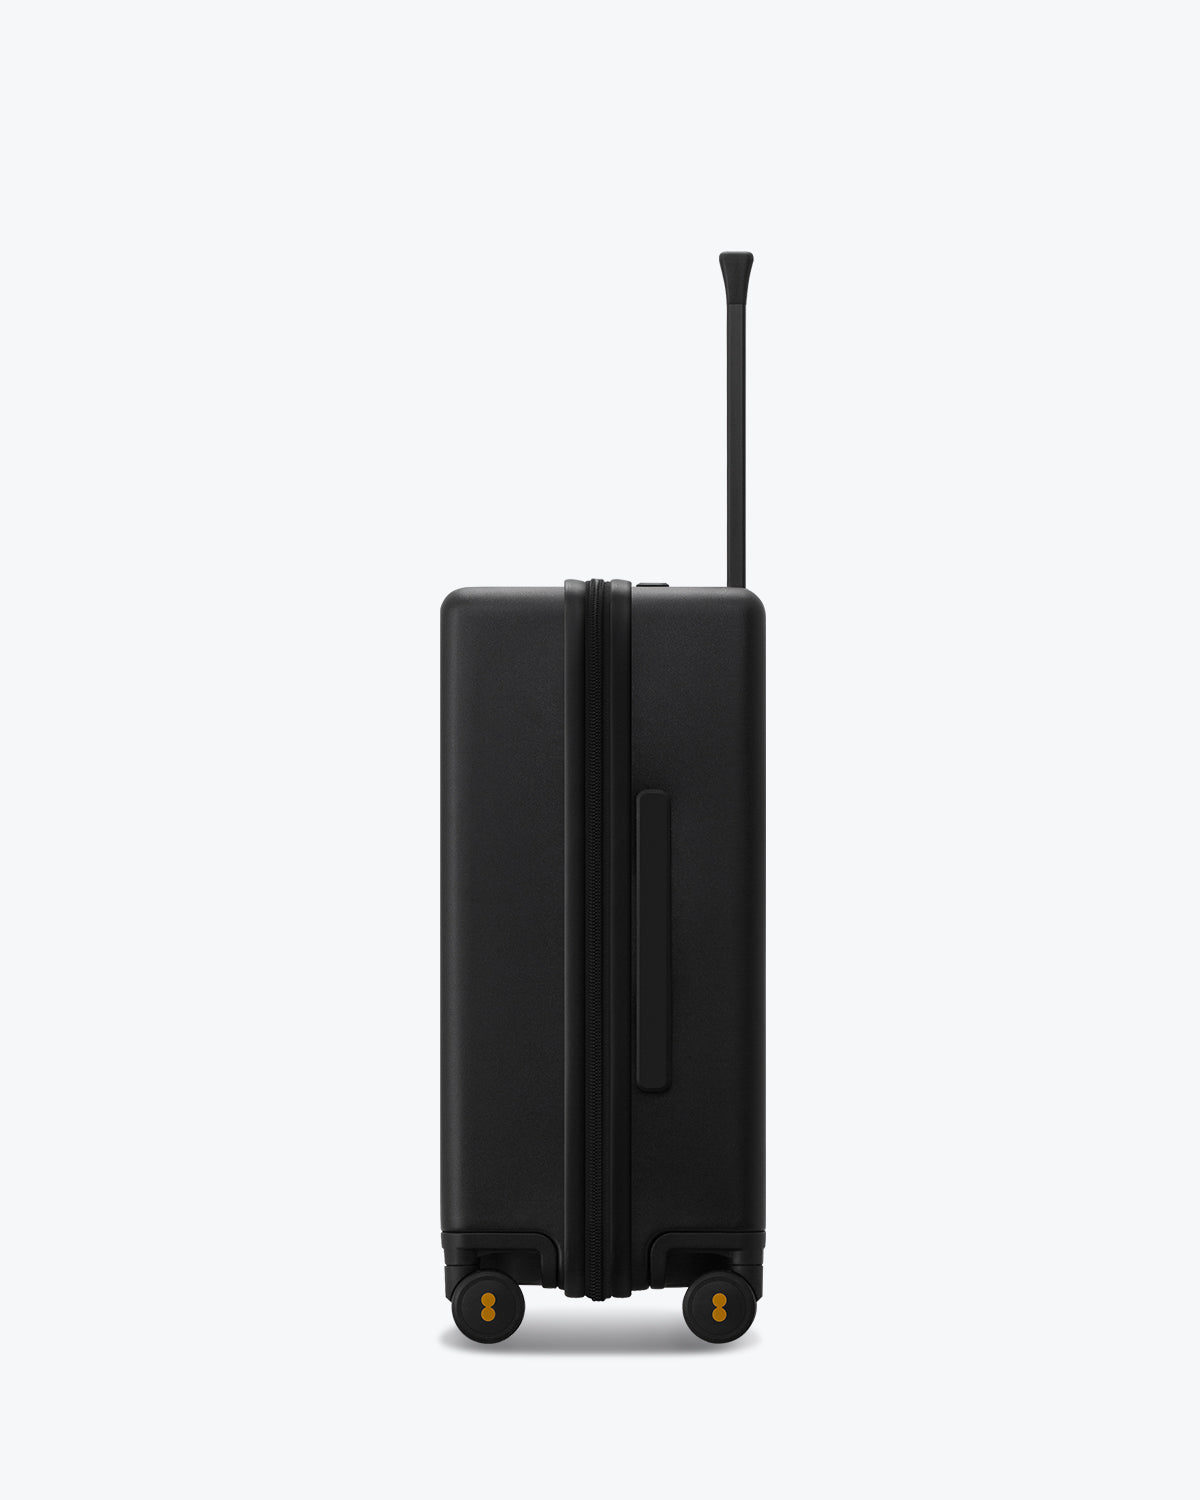  LEVEL8 Elegance Carry On Suitcase, 20” Hardside Luggage with  TSA Lock, Spinner Wheels-Black, 20-Inch